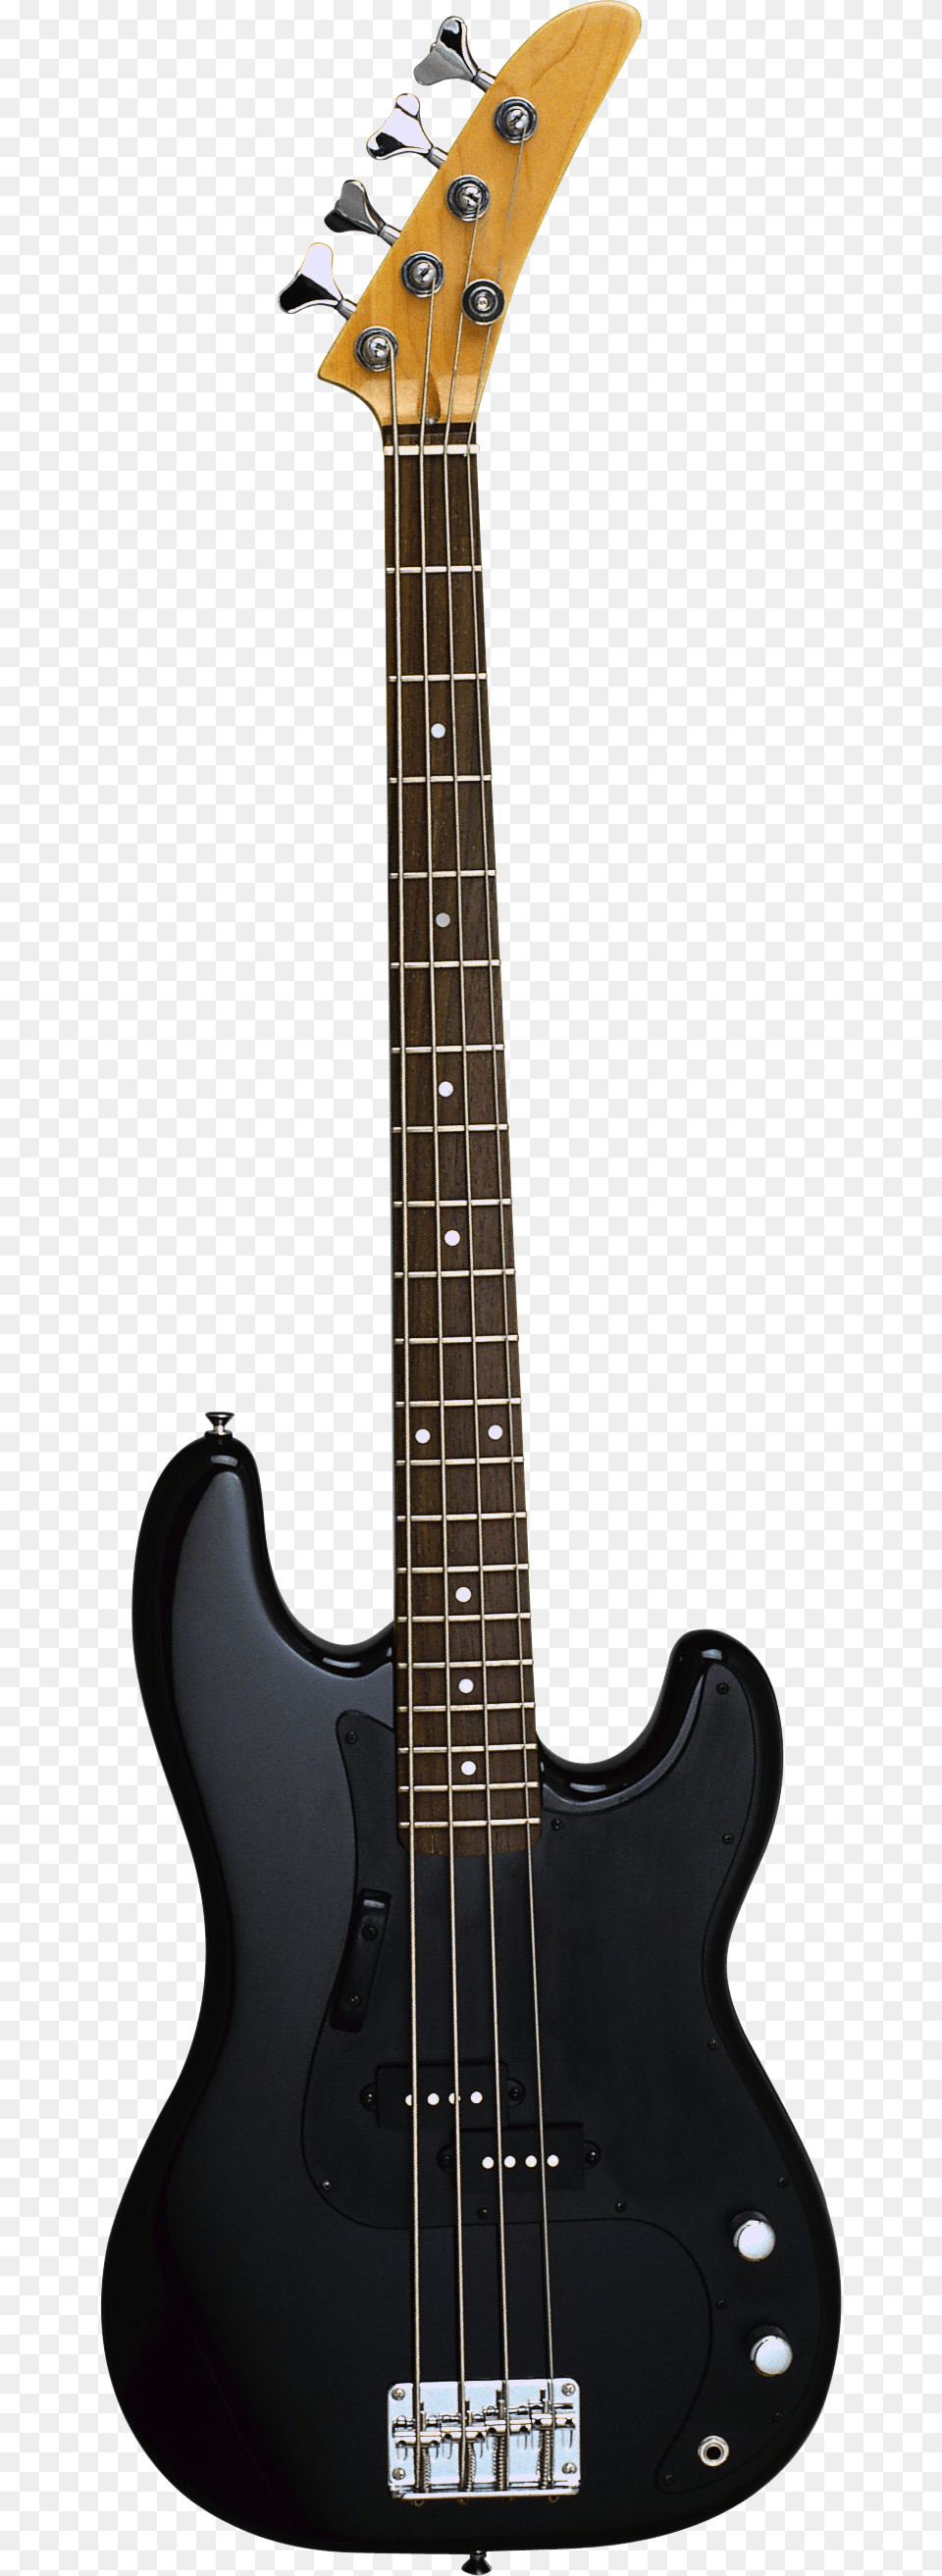 Guitar, Bass Guitar, Musical Instrument Png Image